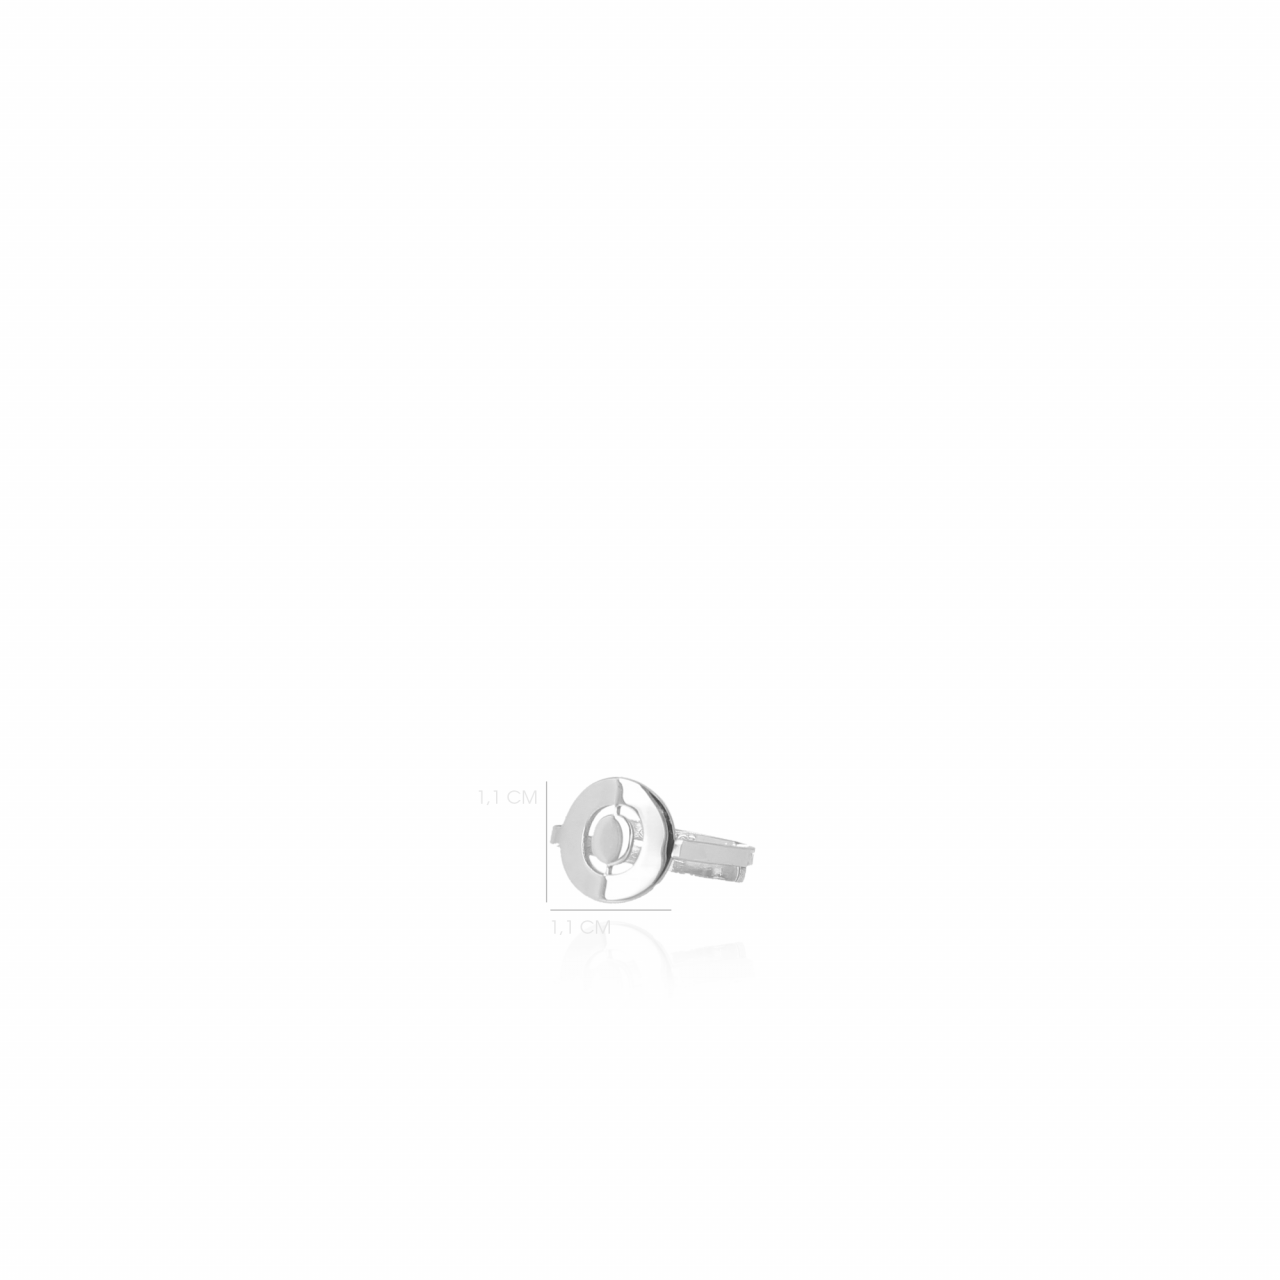 Zilveren ring Initial Largelott-theme.productDescriptionPage.SEO.byTheBrand